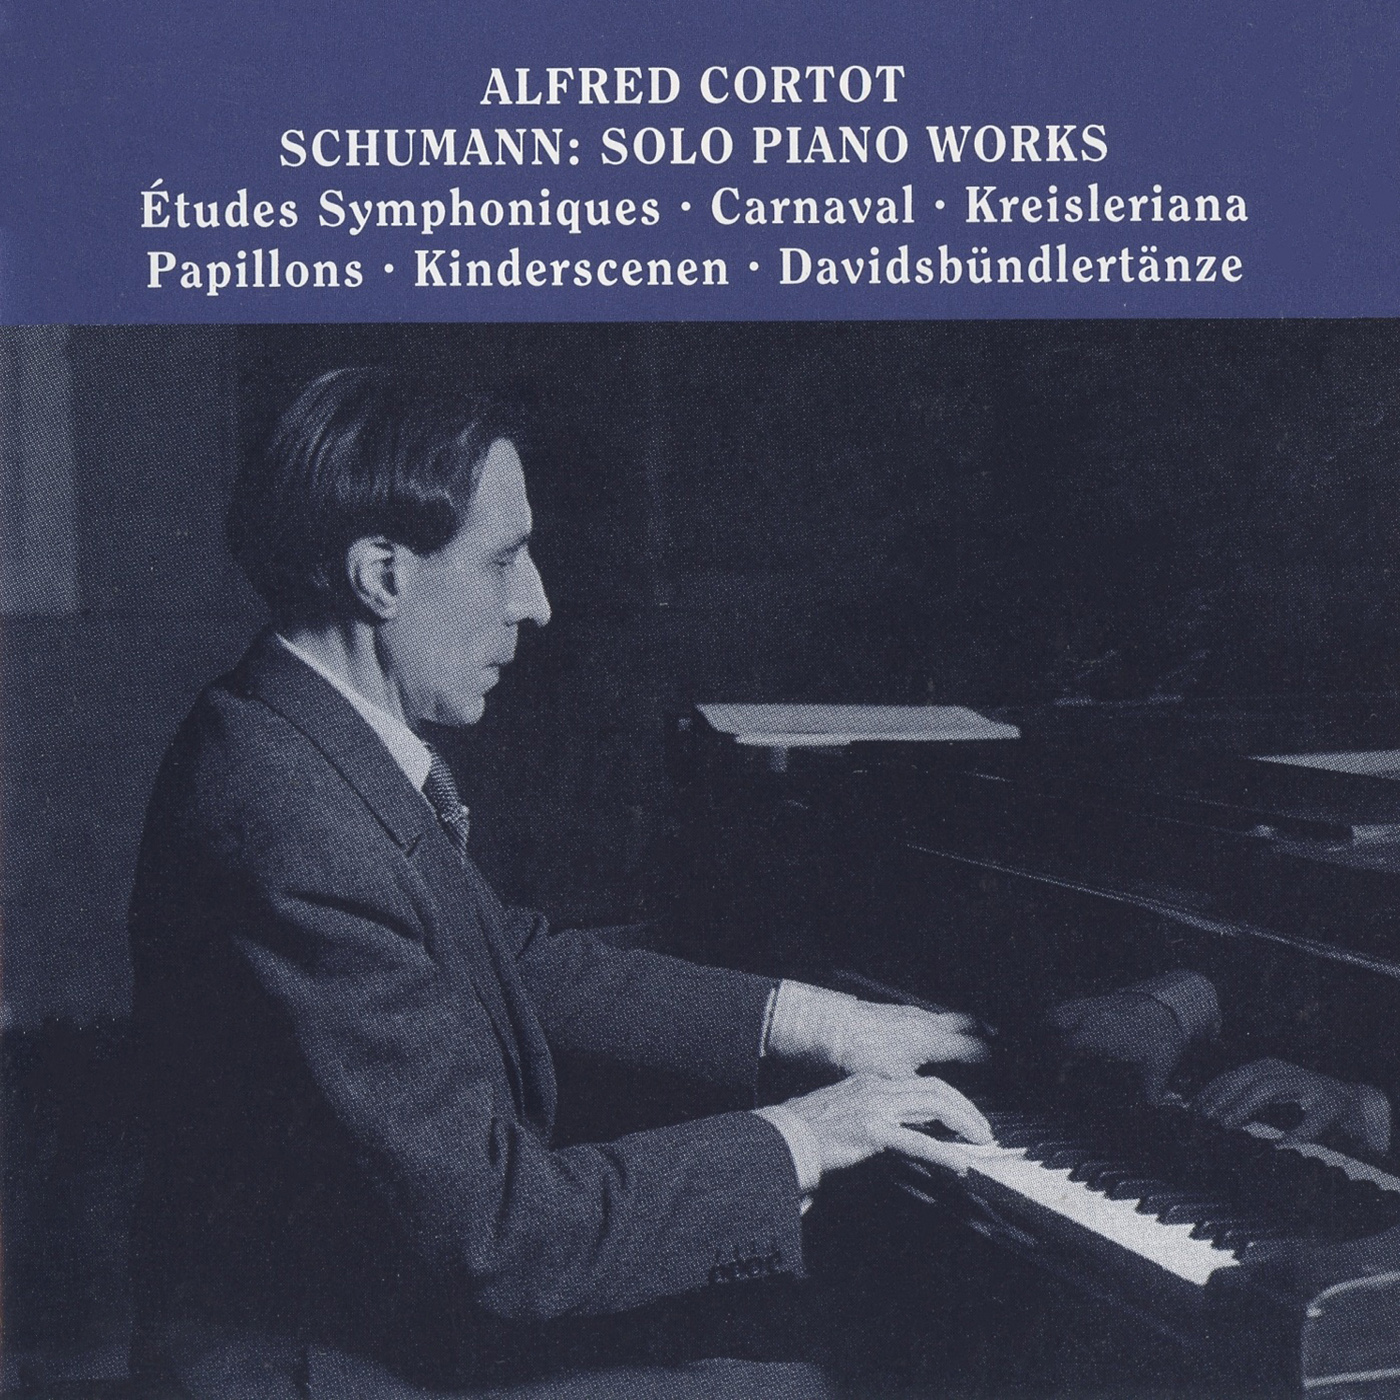 SCHUMANN, R.: Etudes symphoniques / Carnaval / Kreisleriana / Papillons / Kinderszenen / Davidsbundlertanze (Cortot) (1928-1948)